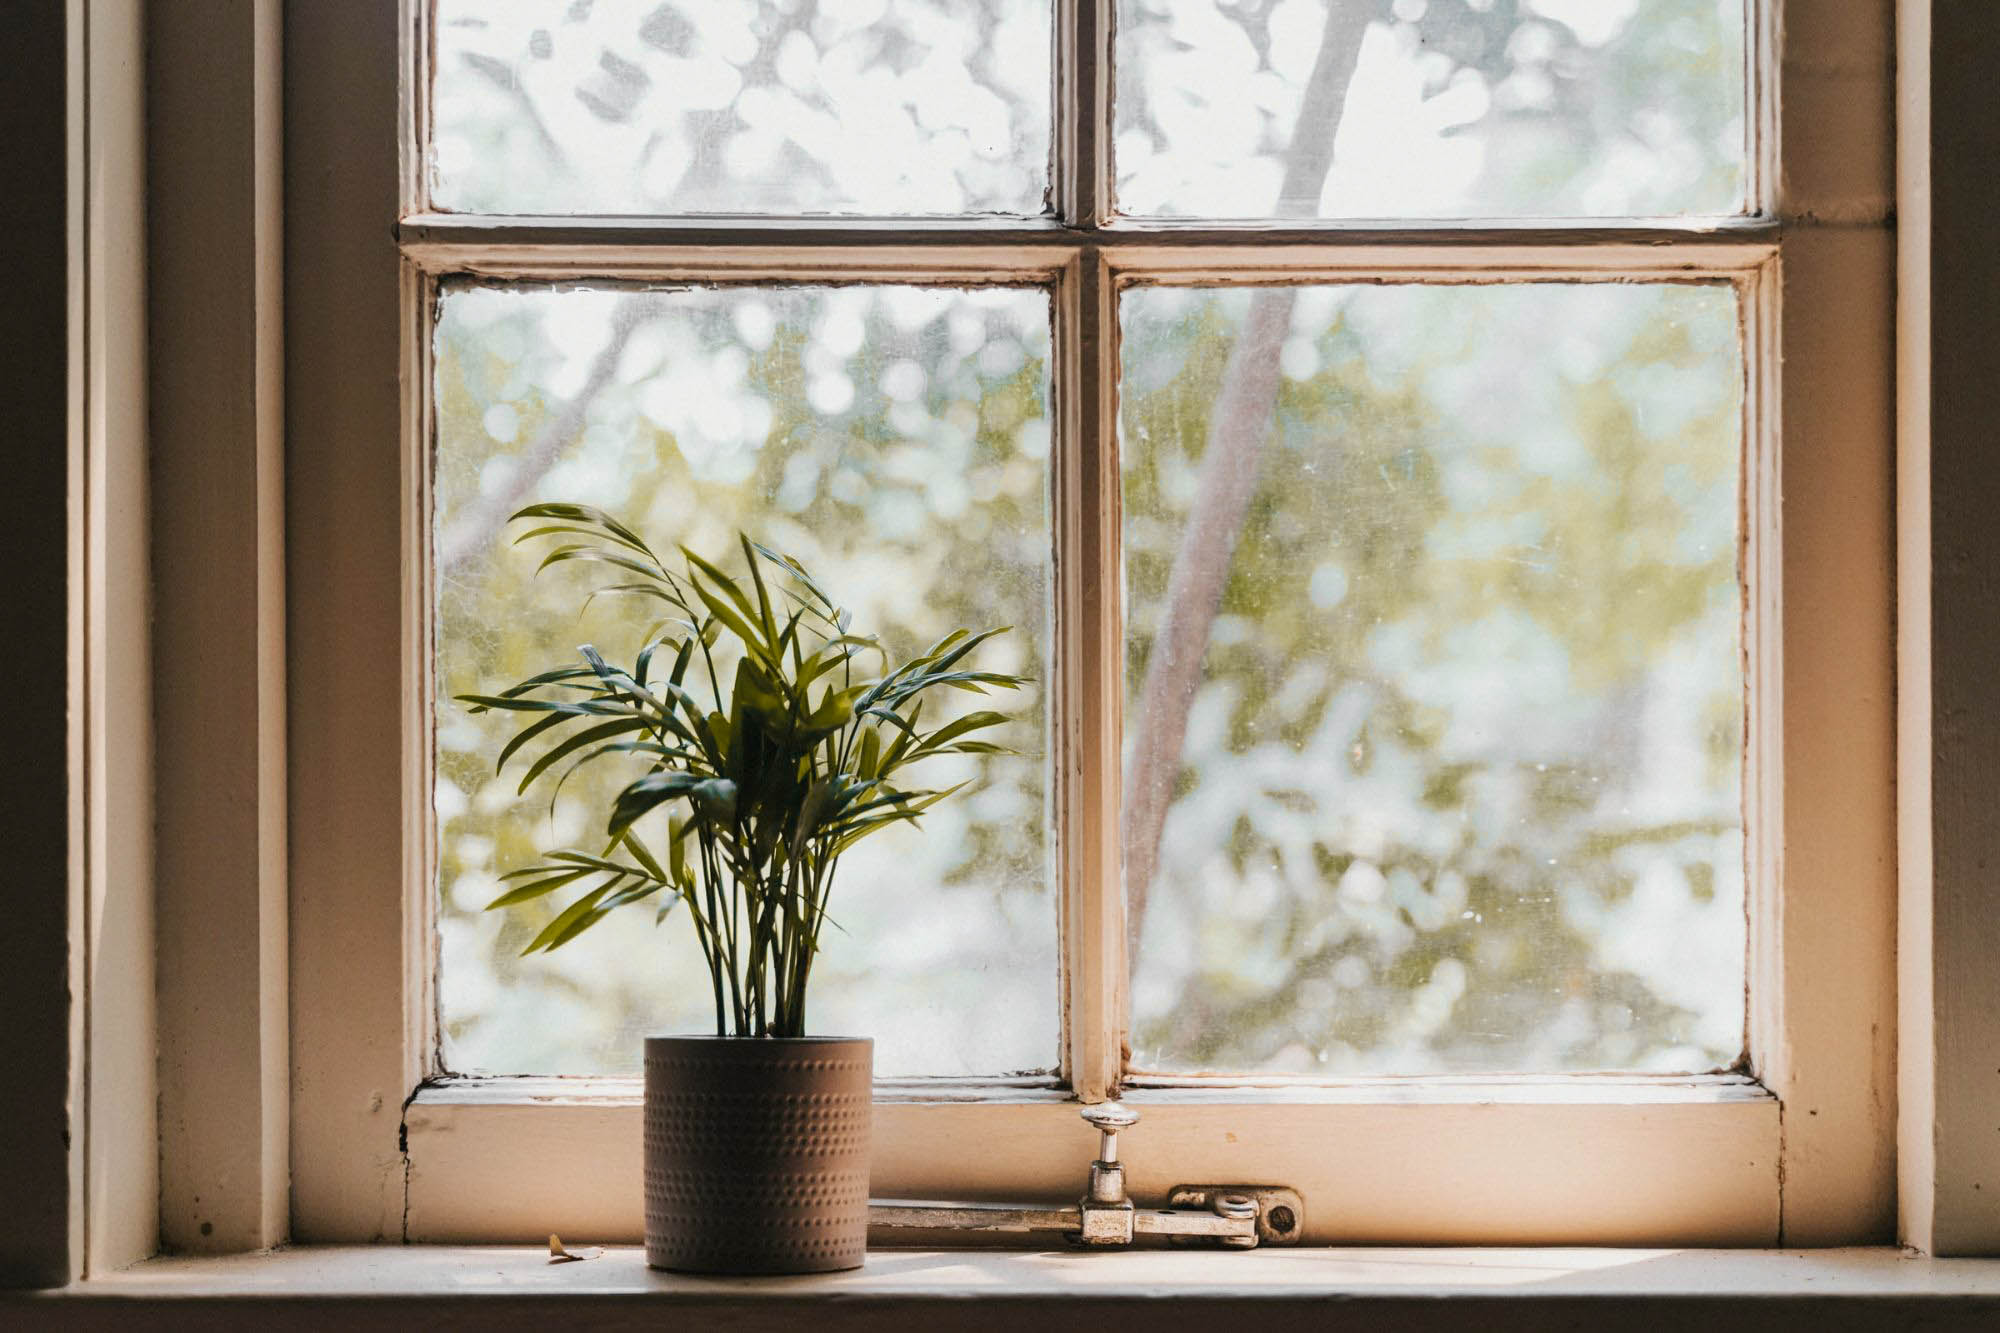 Plant in window sill.